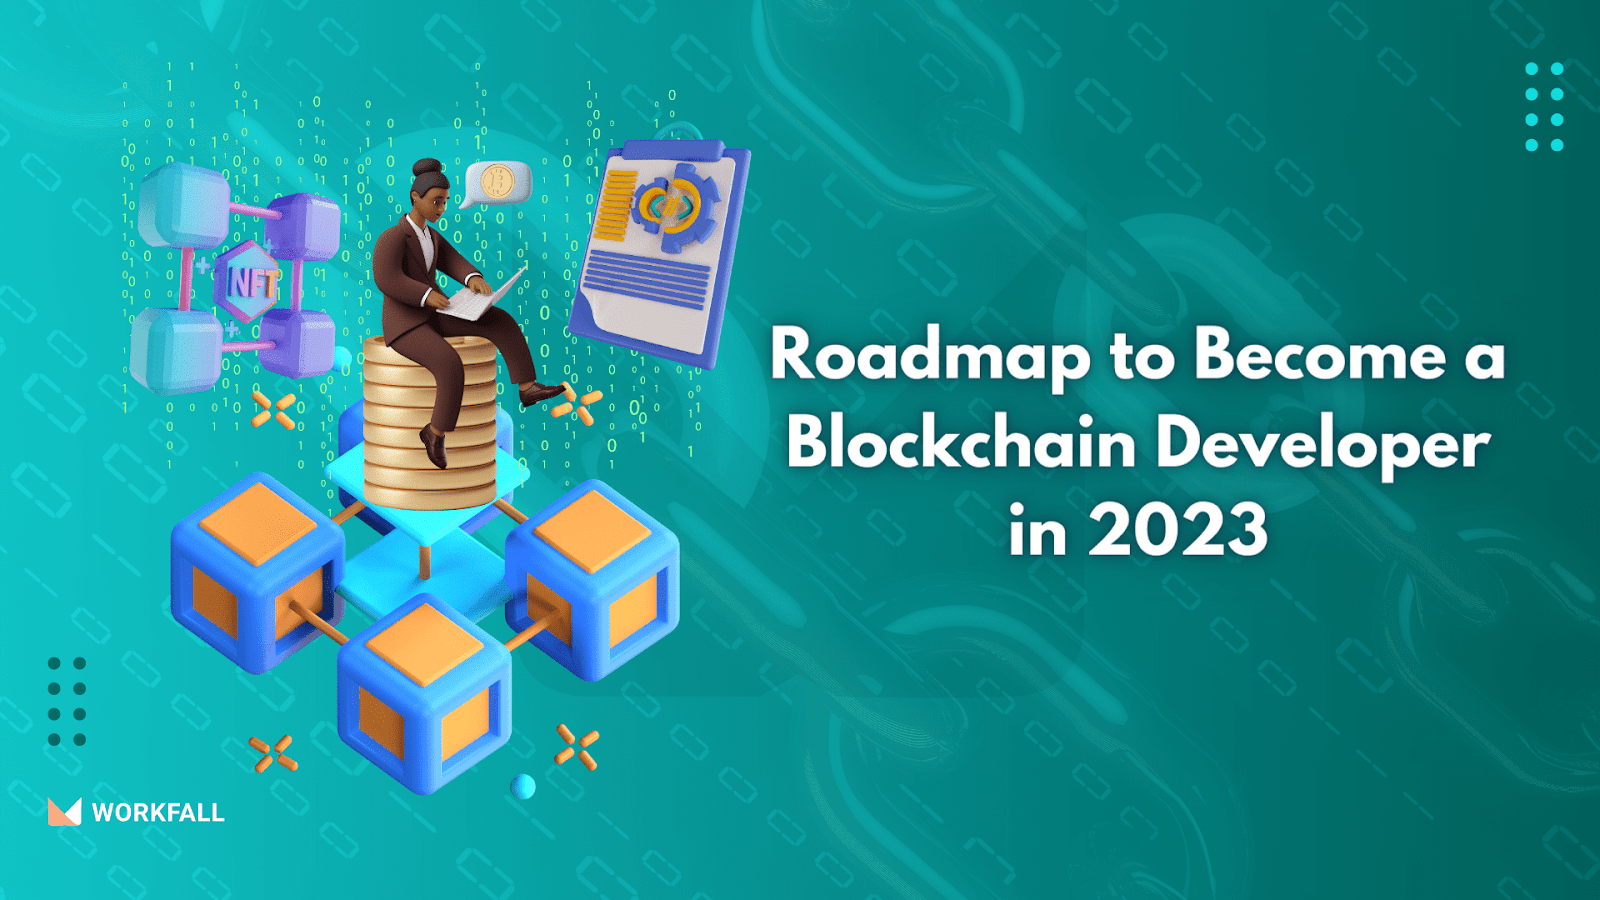 Roadmap to Become a Blockchain Developer in 2023